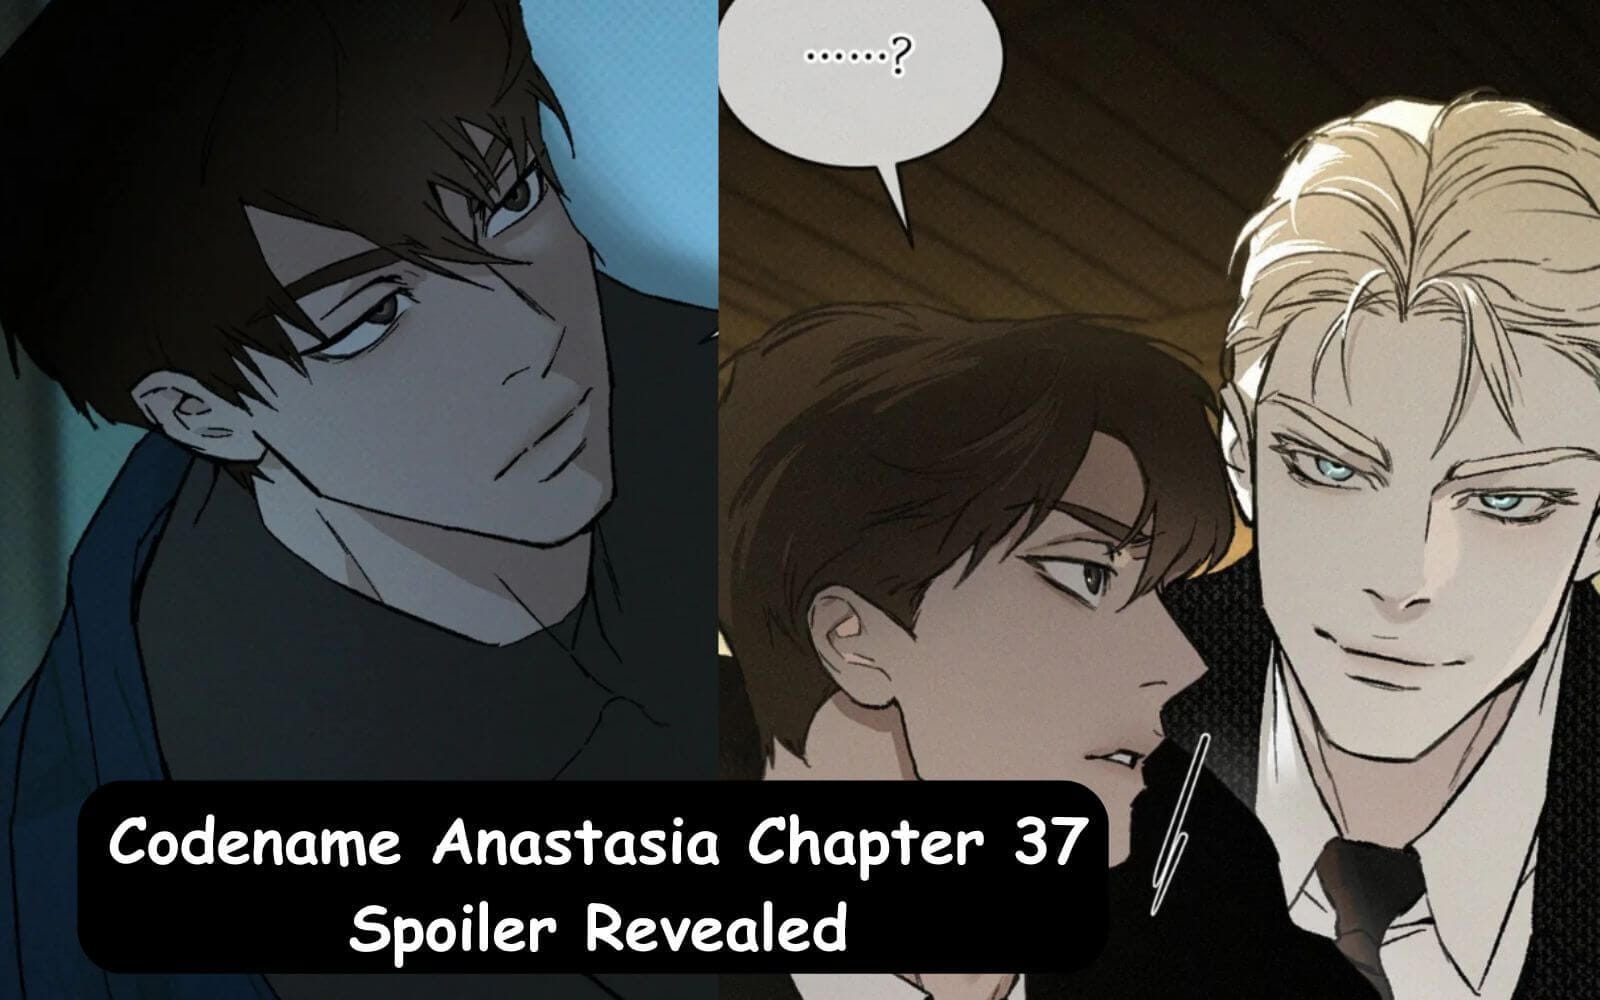 Codename Anastasia Chapter 37 Spoiler Revealed